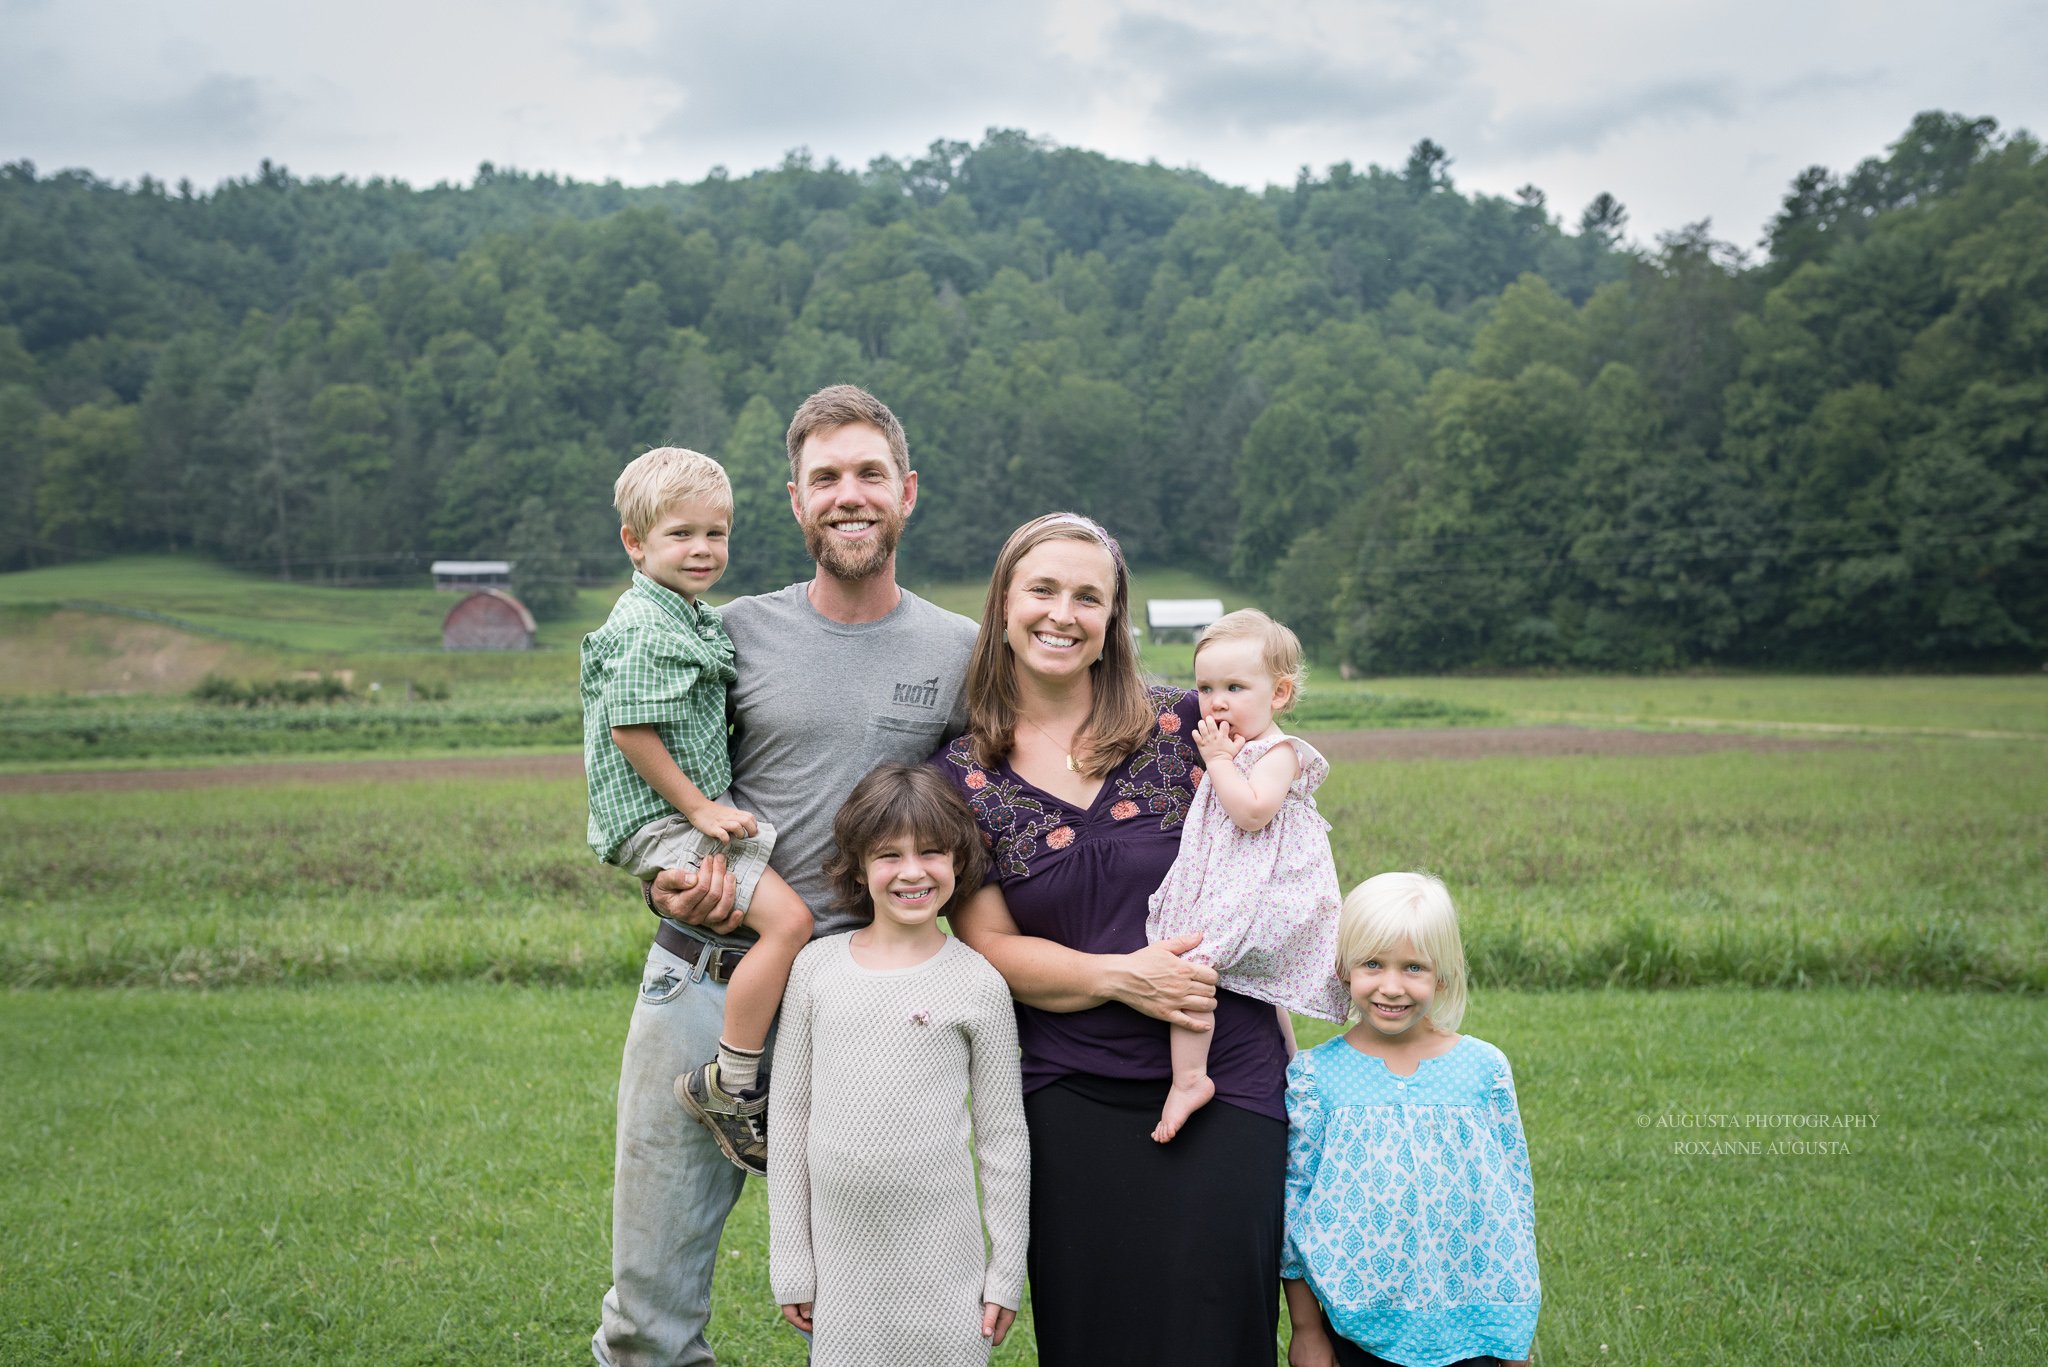 The Bryk Family of New Life Farm